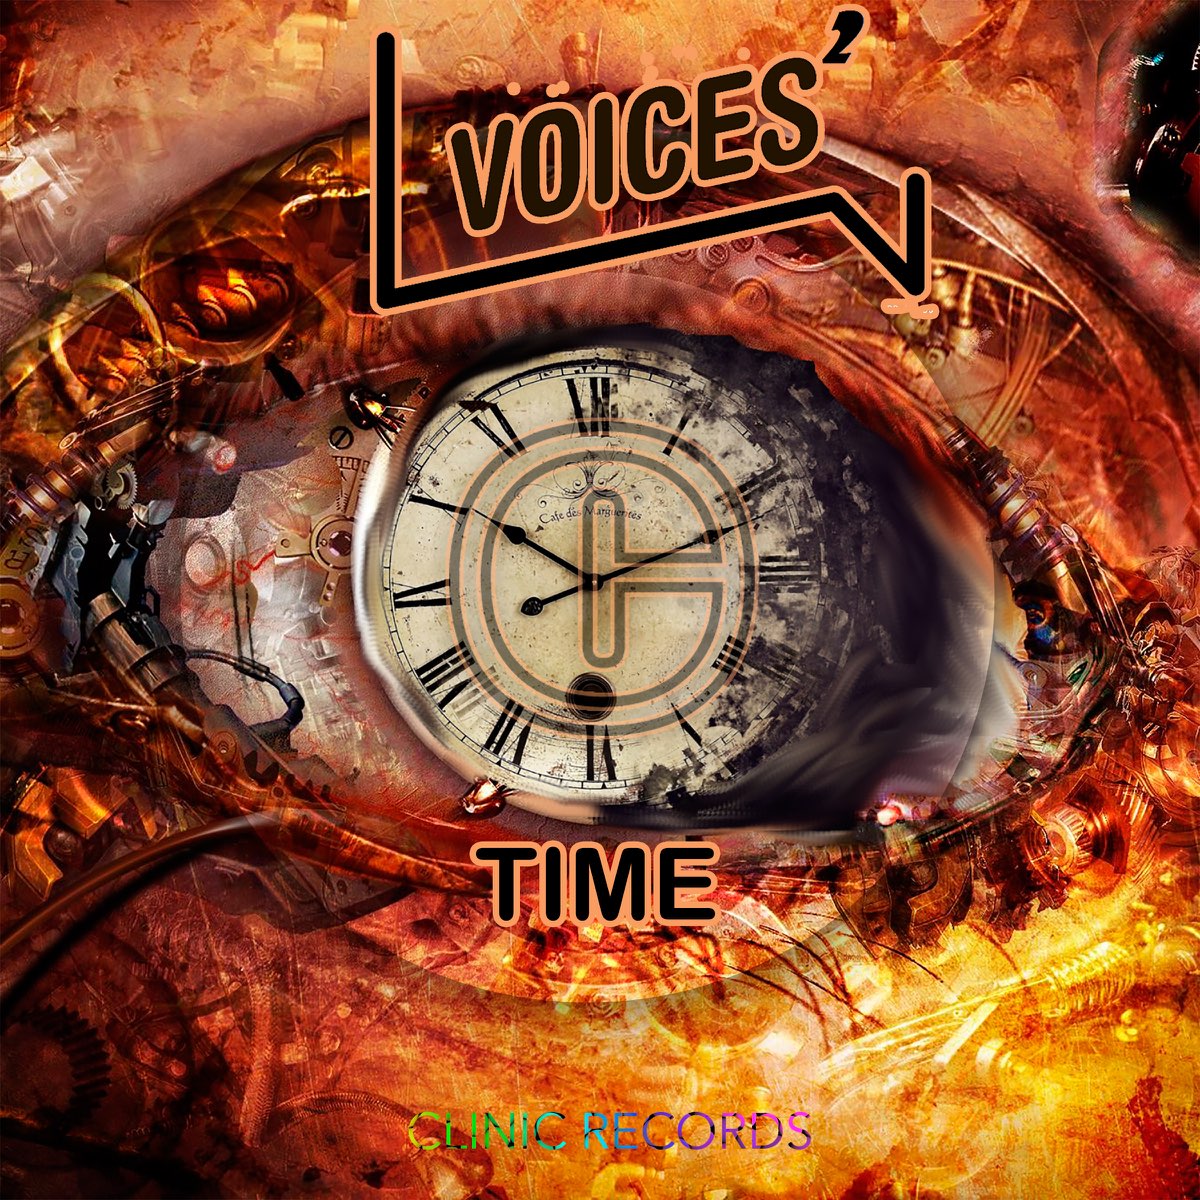 Voice of time. Часы вспять. Растворяющие часы jpg PNG. 2003 - Voices from the past.